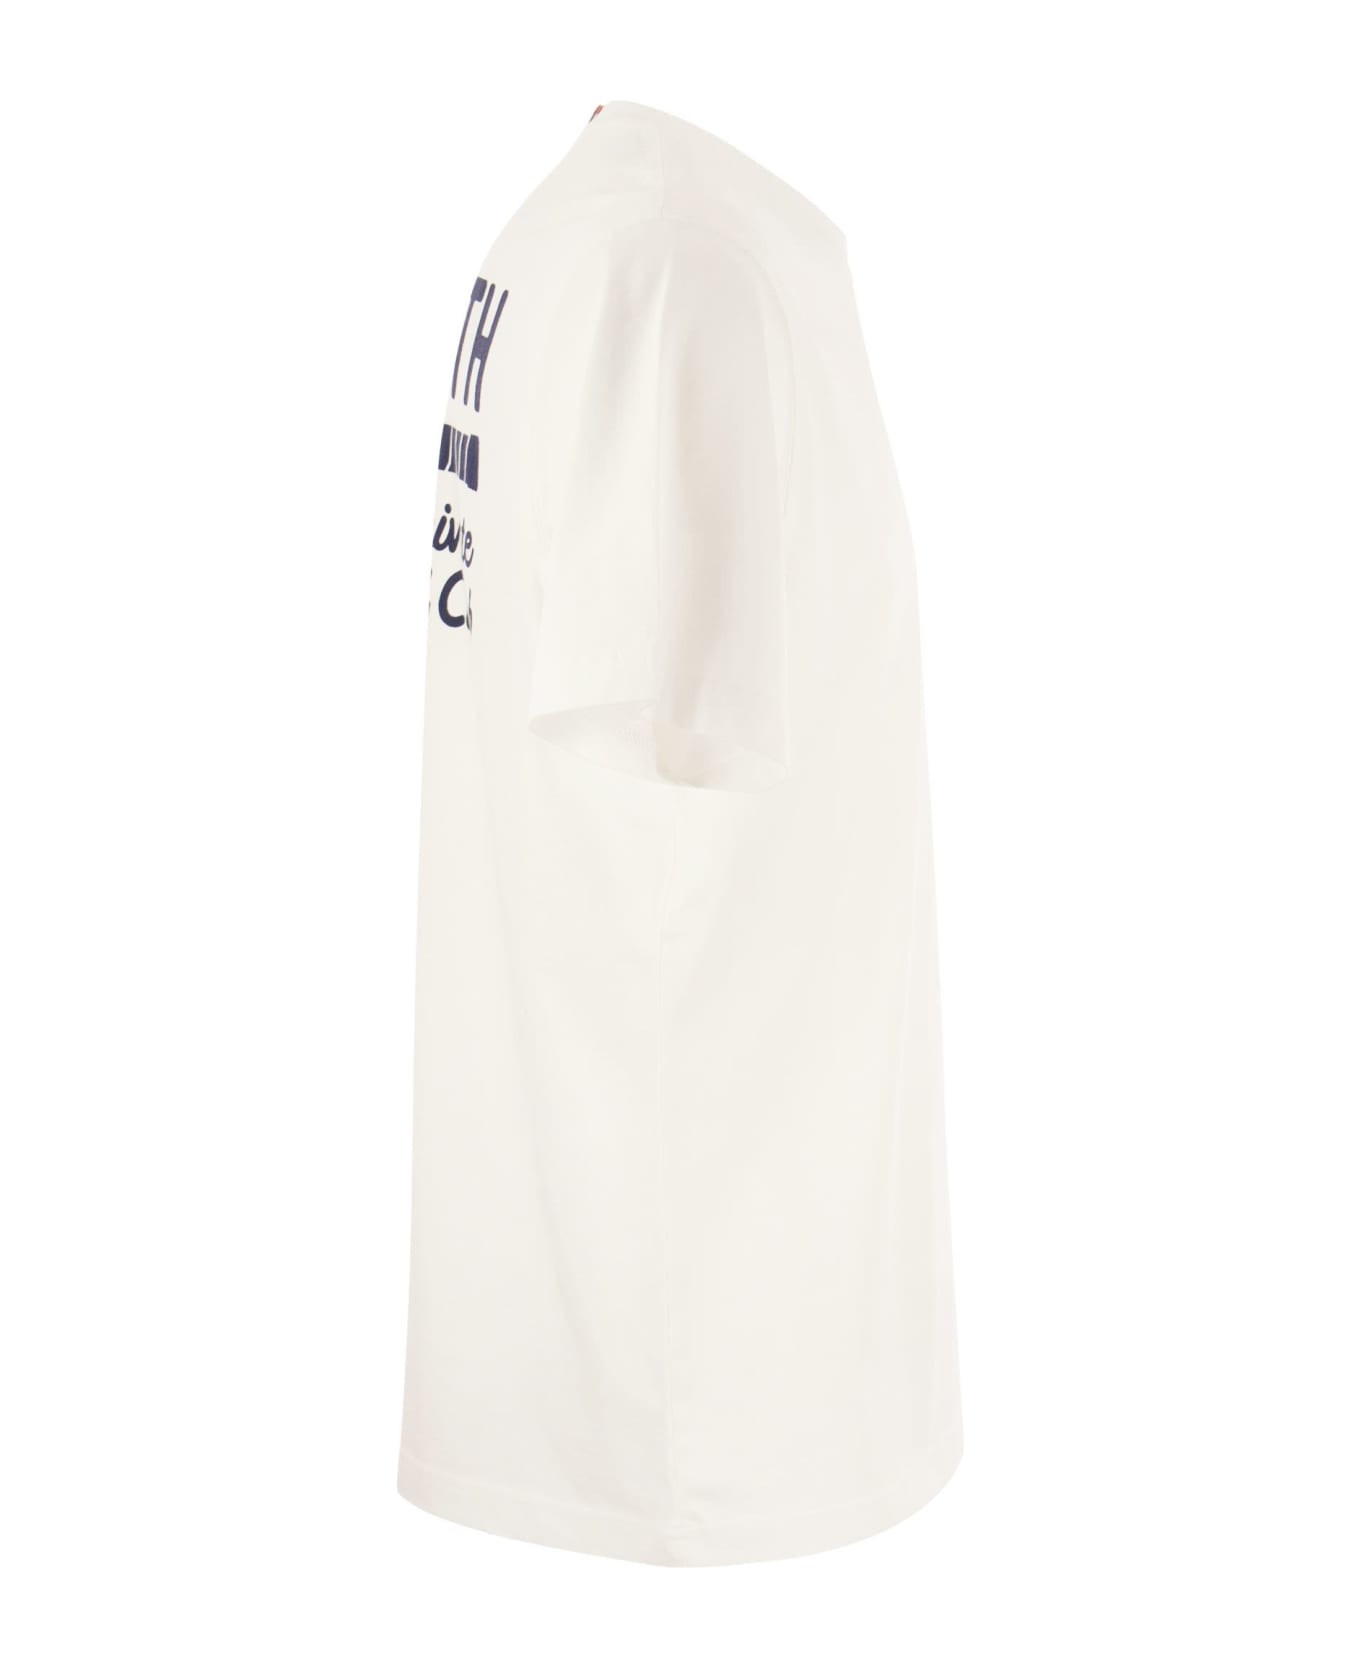 MC2 Saint Barth Cotton T-shirt With Padel Club Print - White